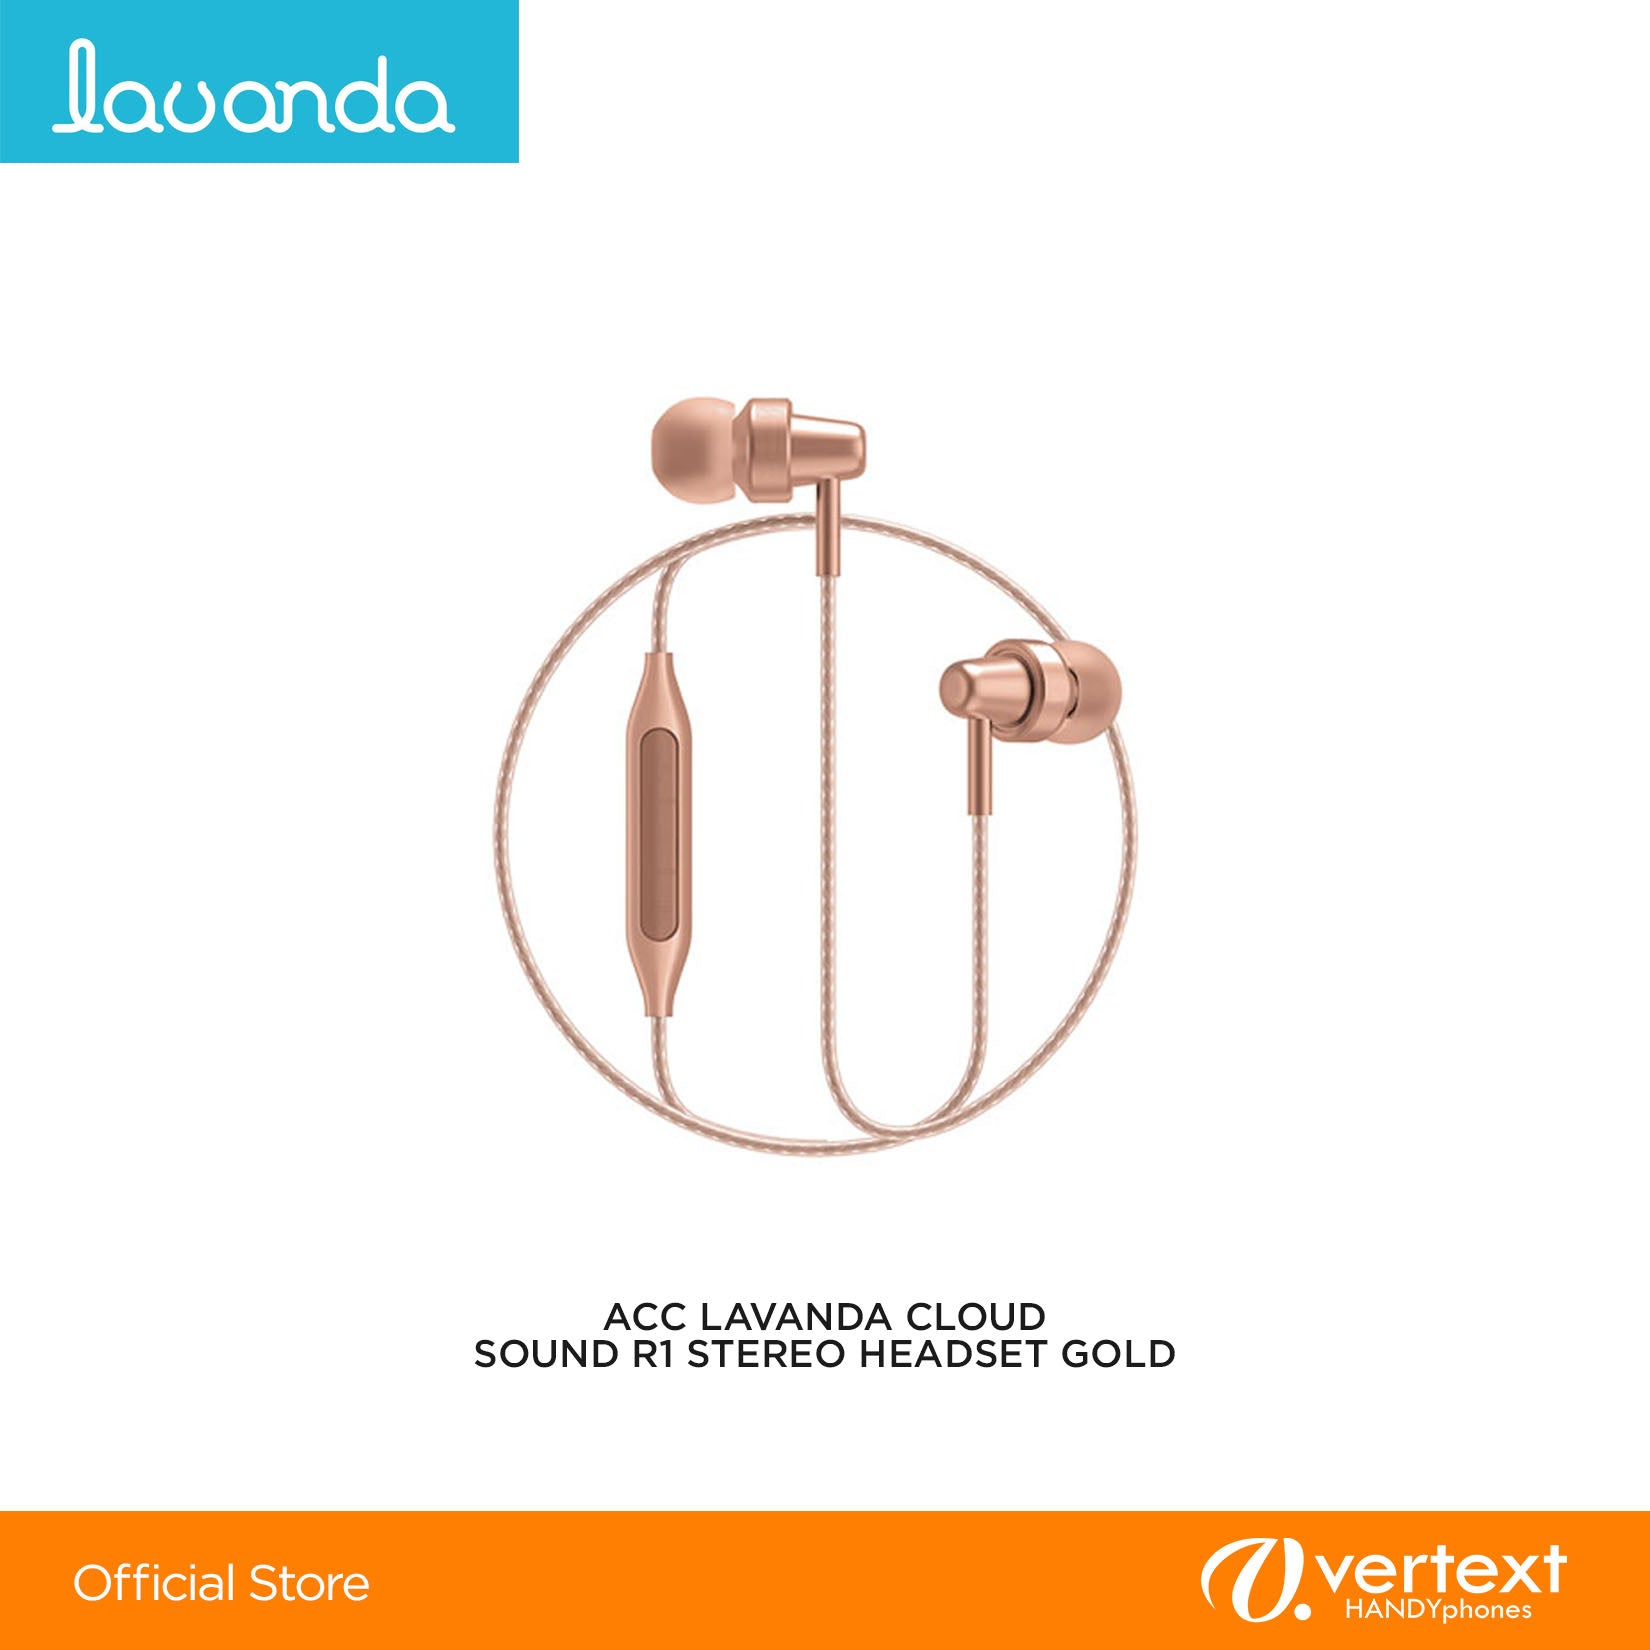 Lavanda Cloud Sound R1 Stereo Headset Gold